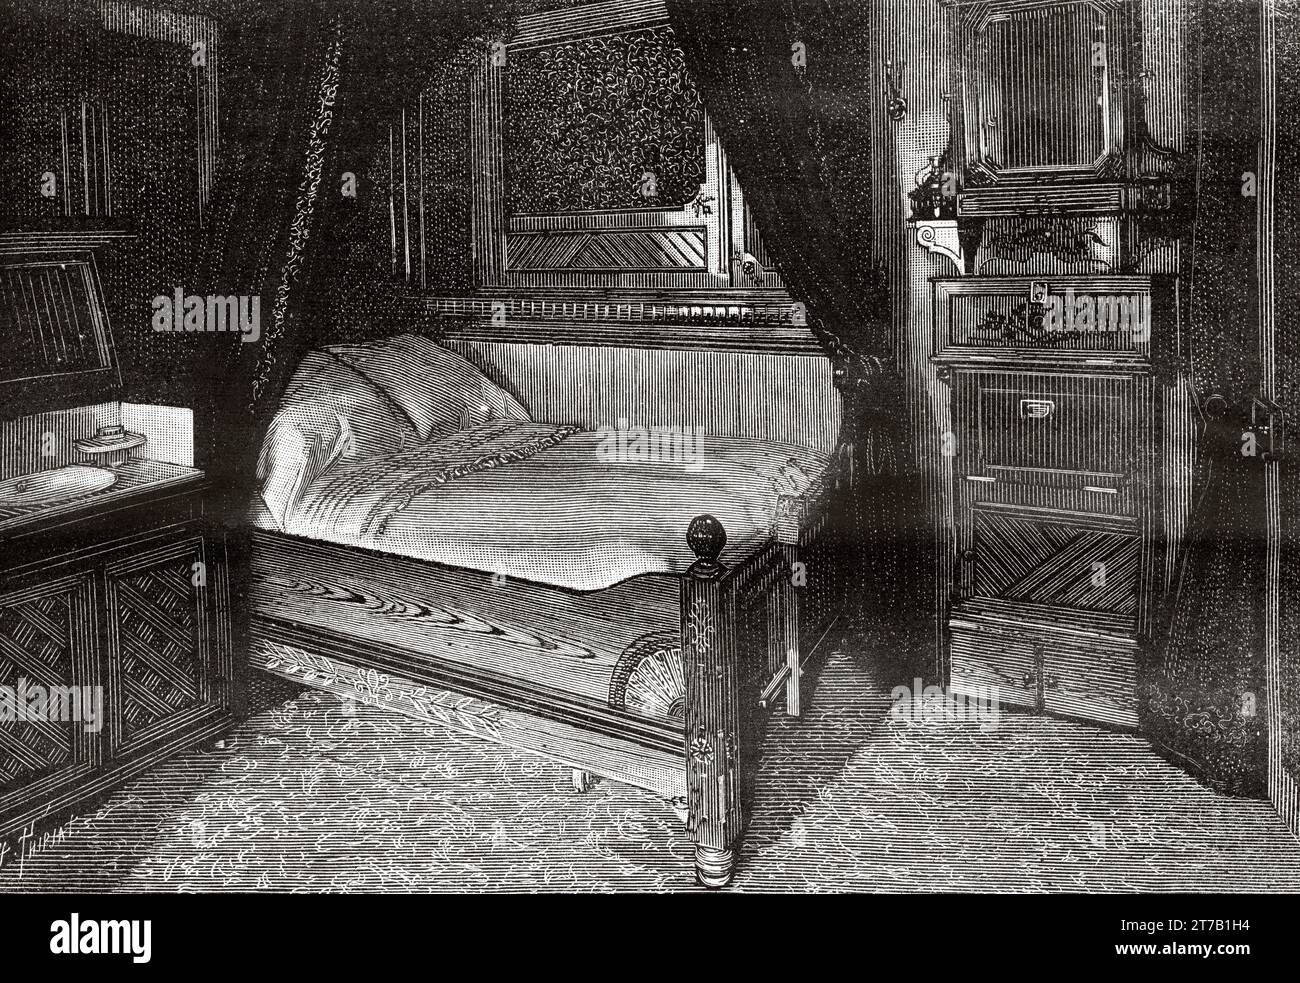 Paquebot la Gascogne. Luxury cabin of the transatlantic liner Gascogne. Old illustration from La Nature 1887 Stock Photo